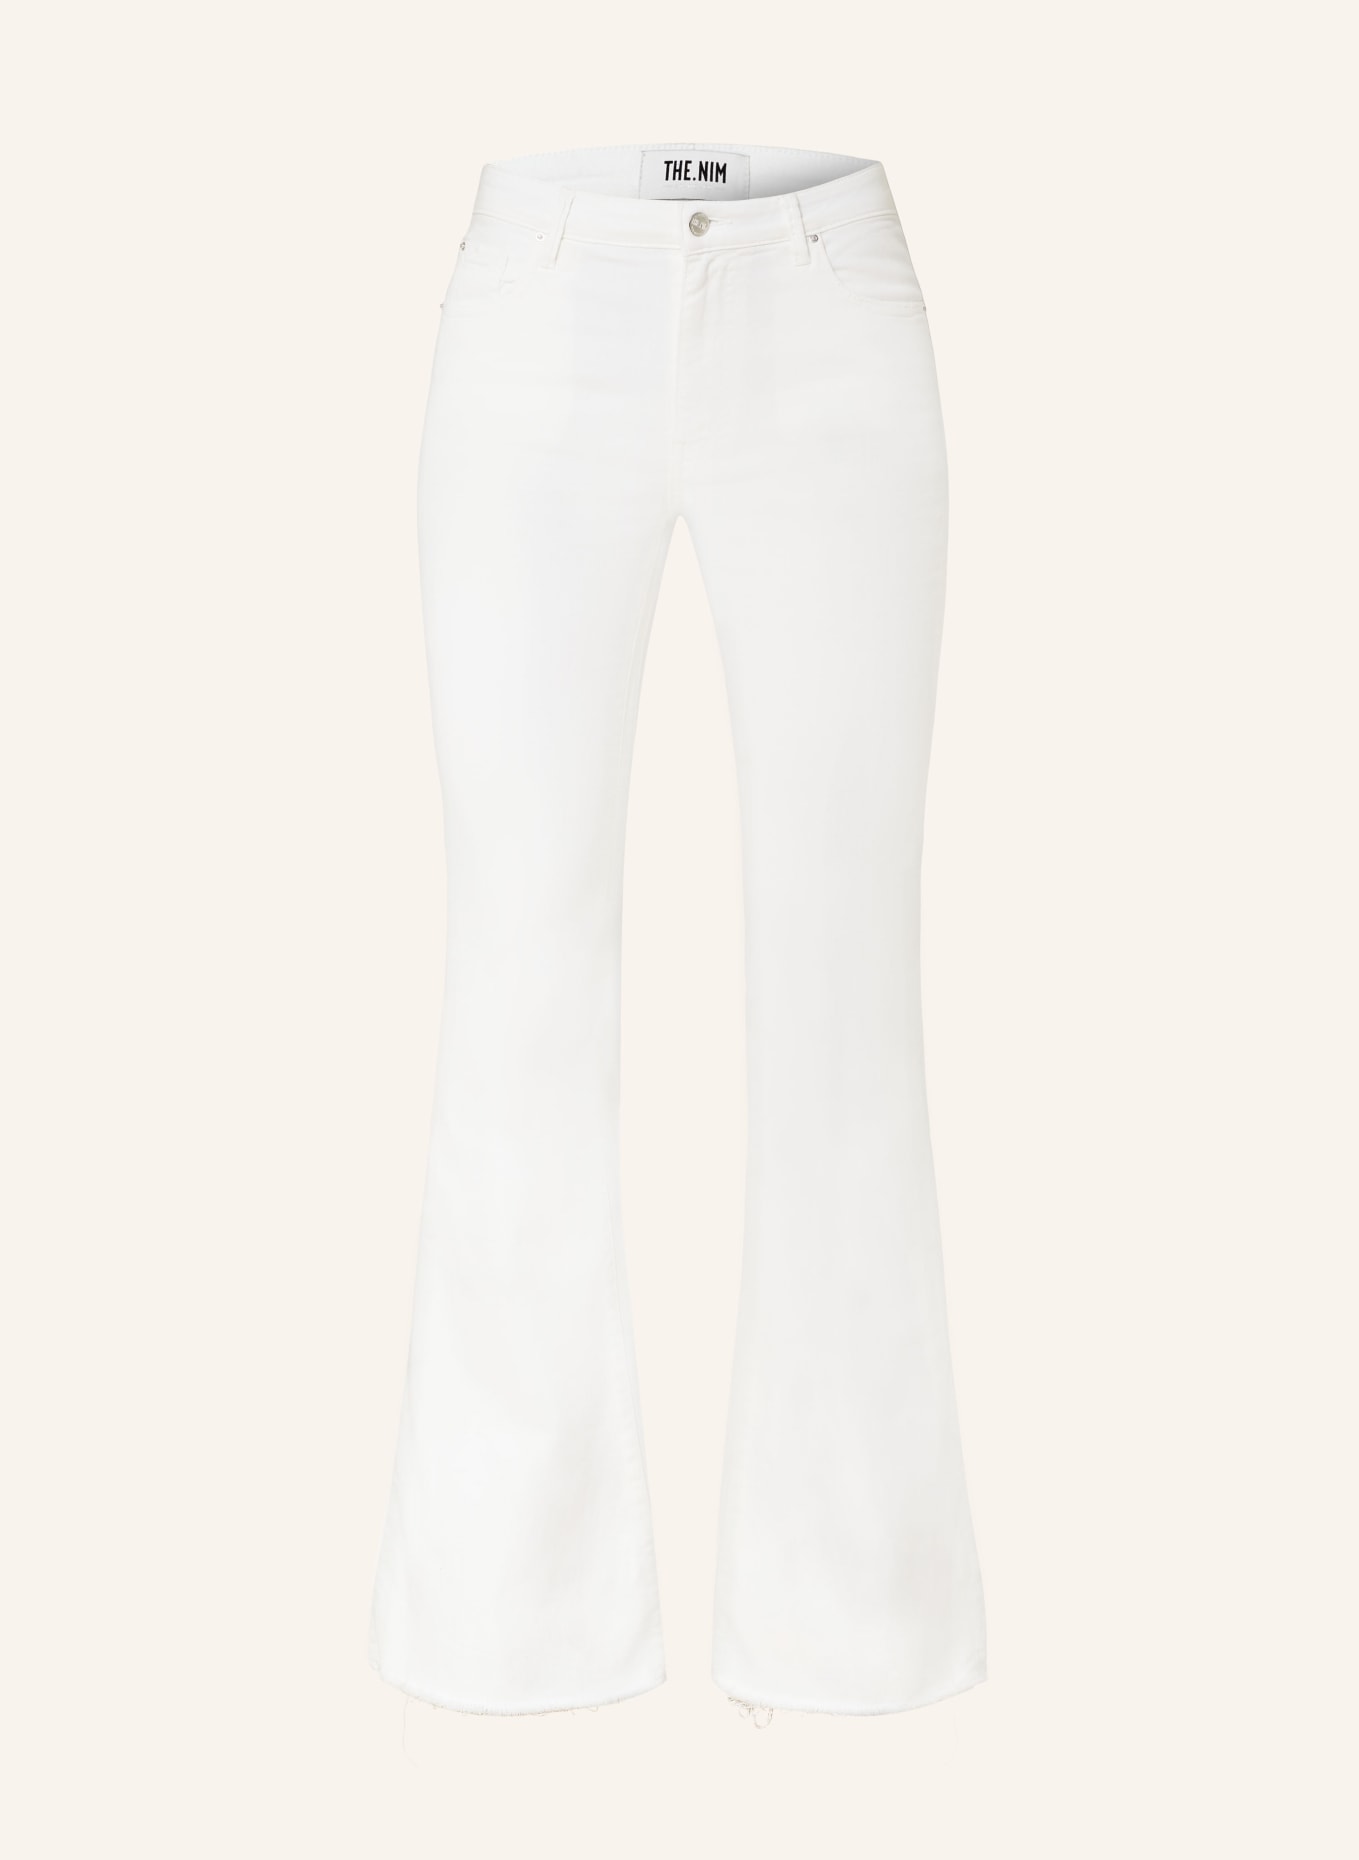 THE.NIM STANDARD Flared Jeans KYLIE, Farbe: C001-WHT WHITE (Bild 1)